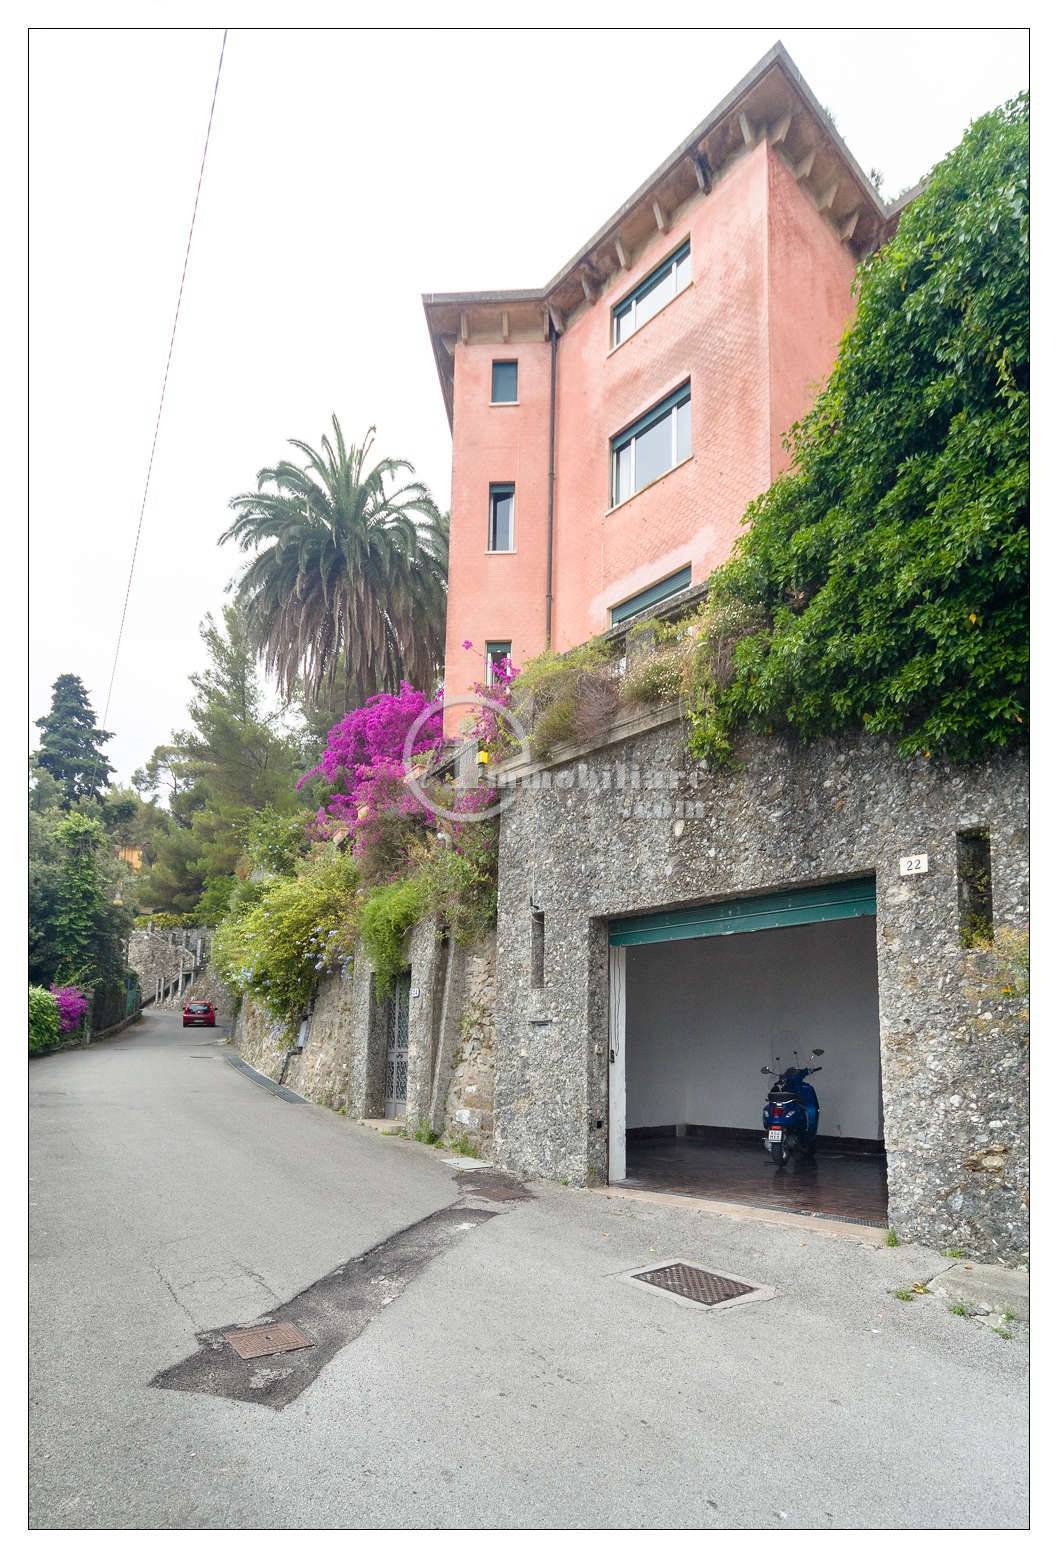 Villa in Vendita a Santa Margherita Ligure: 5 locali, 600 mq - Foto 11